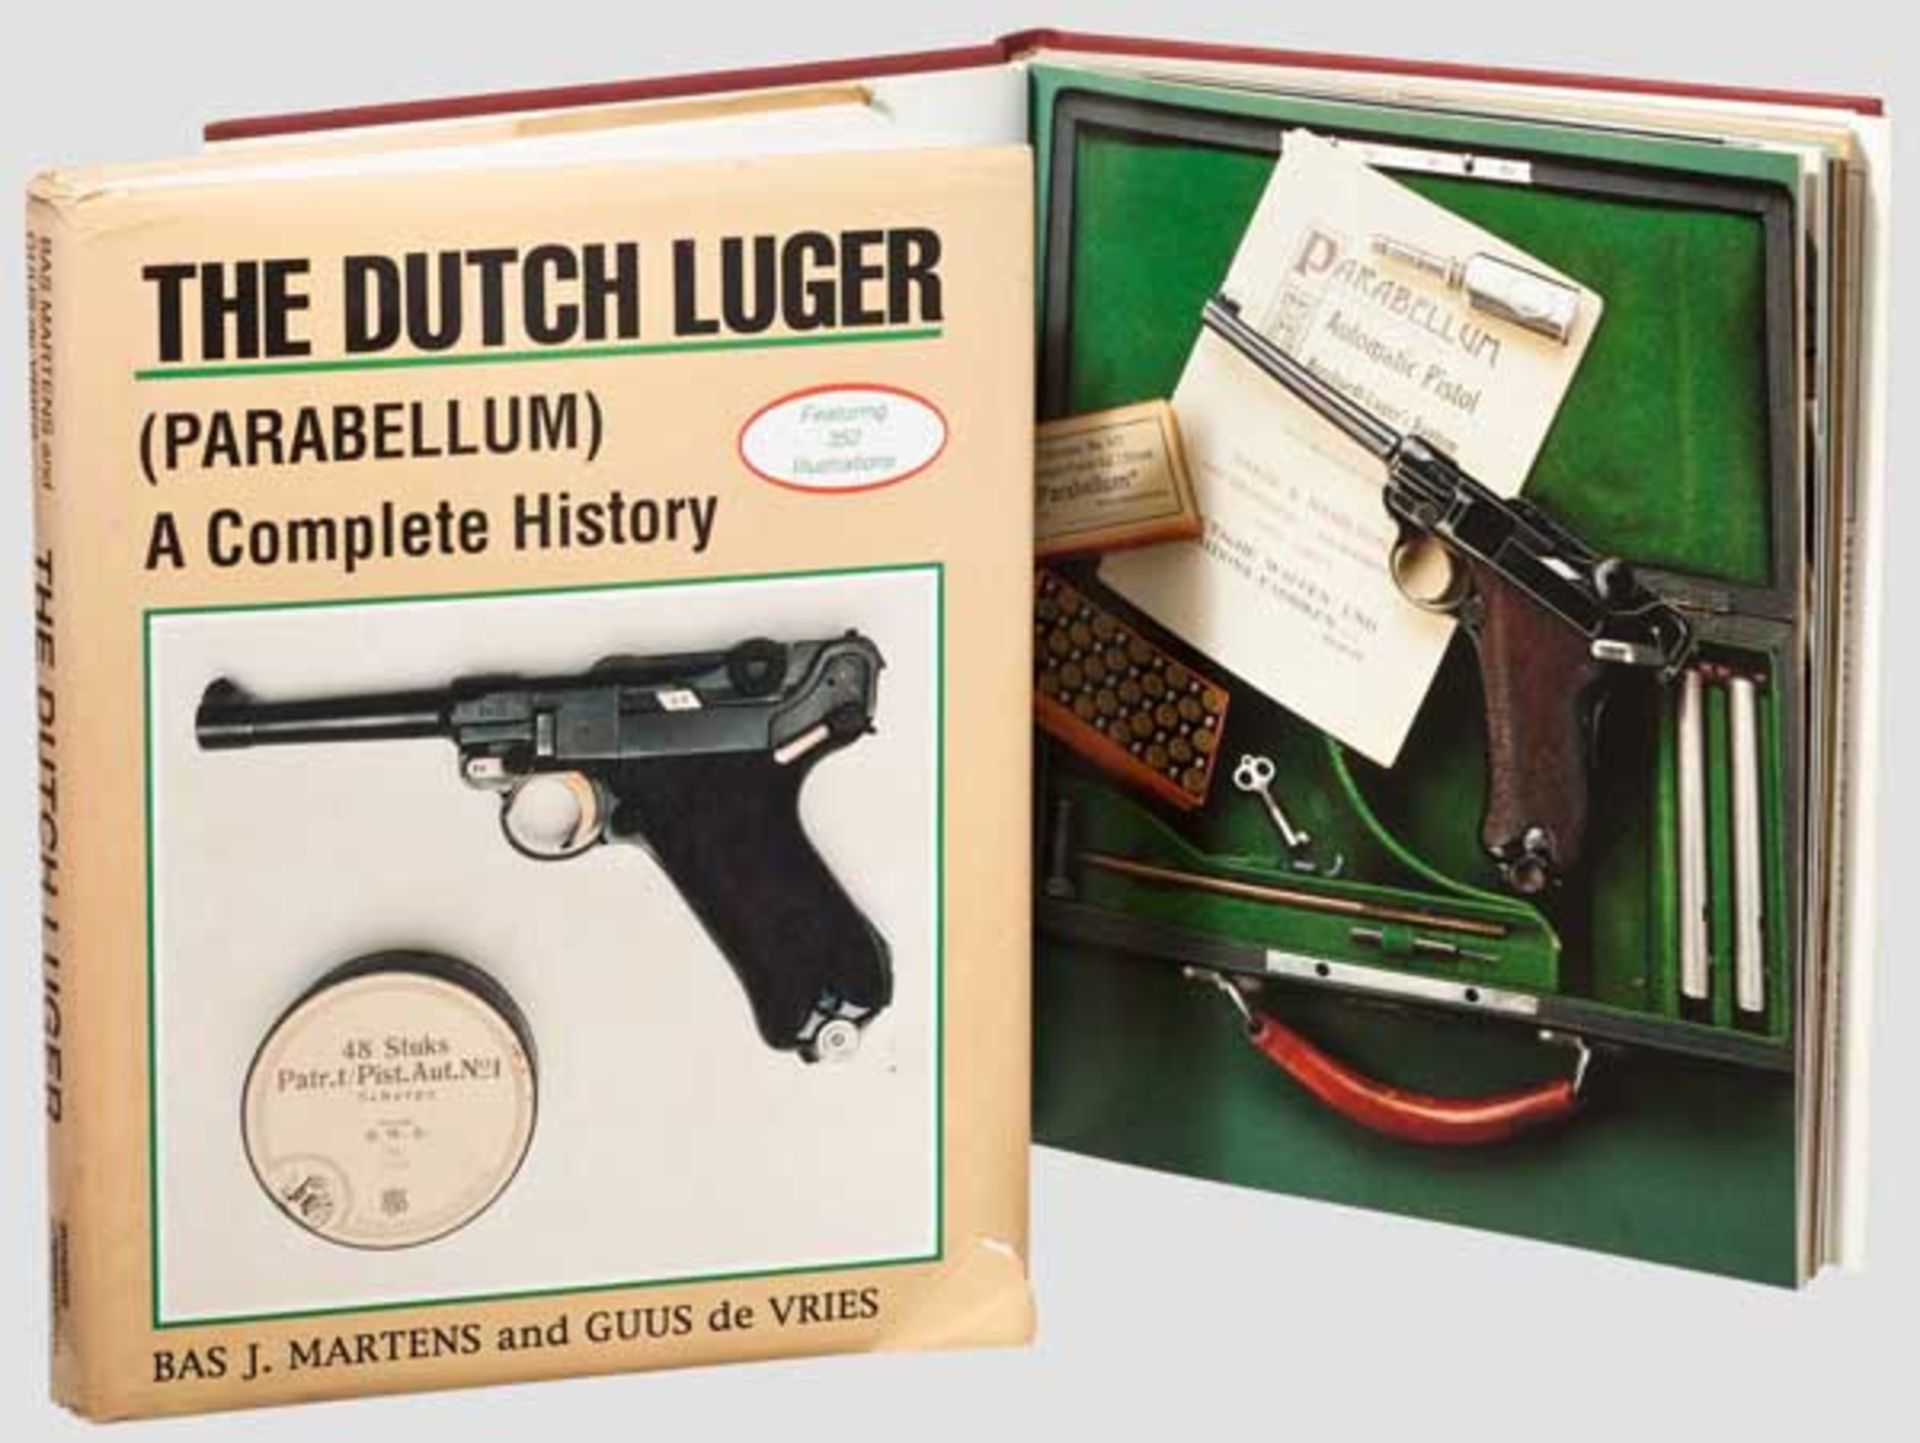 Zwei Bücher - "Dutch Luger" und "Luger: Multi National Pistol" Bas Martens/Guus de Vries, The